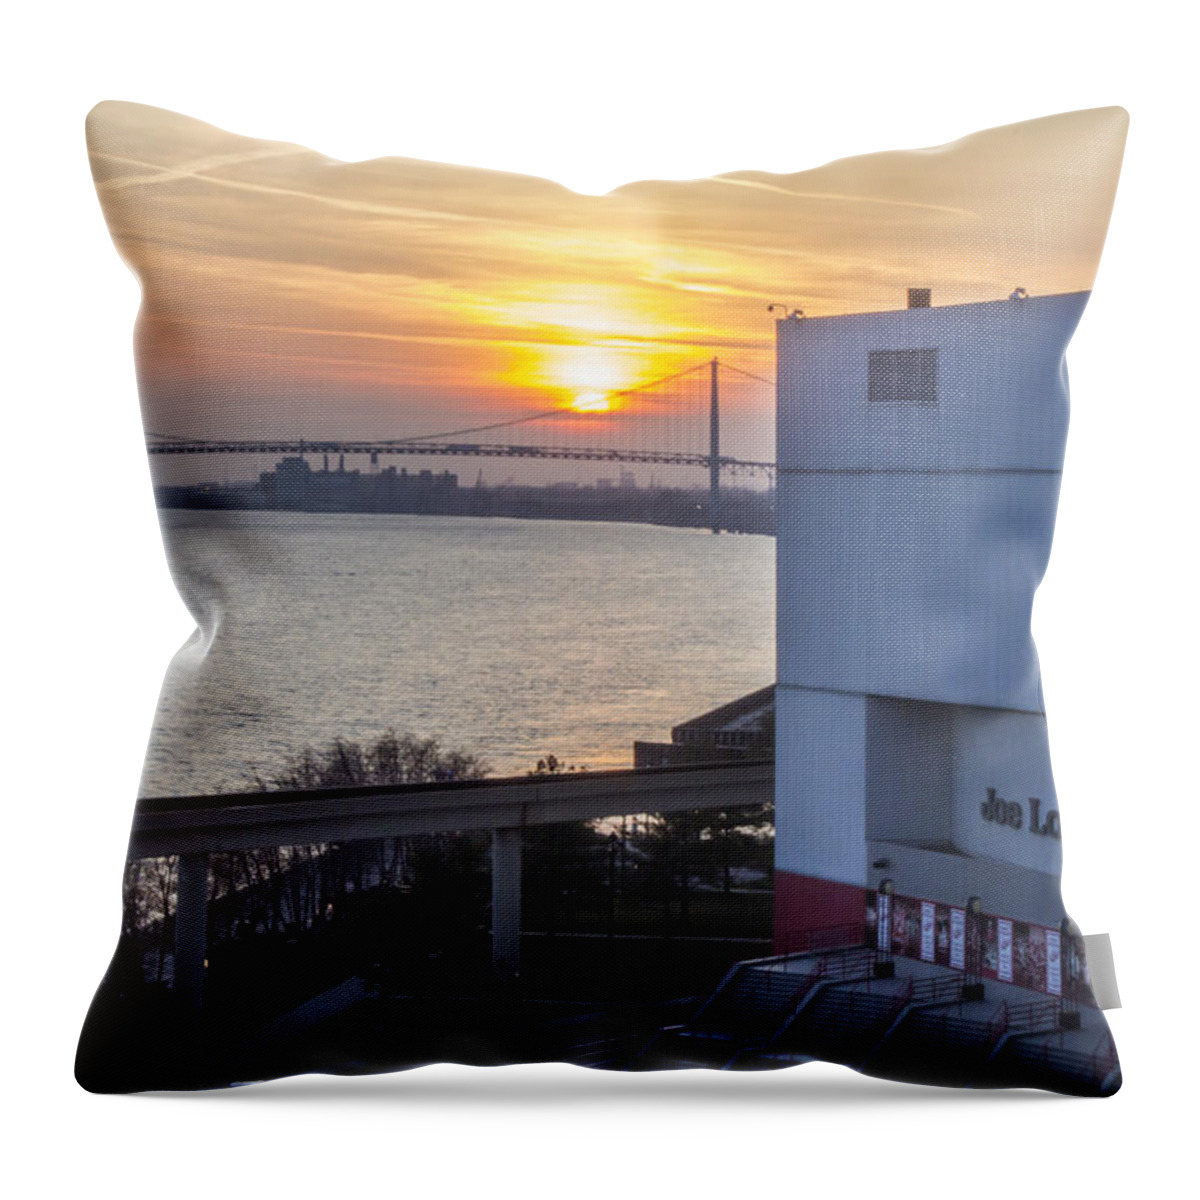 Detroit Throw Pillow featuring the photograph Joe Louis Arena at Sunset by John McGraw